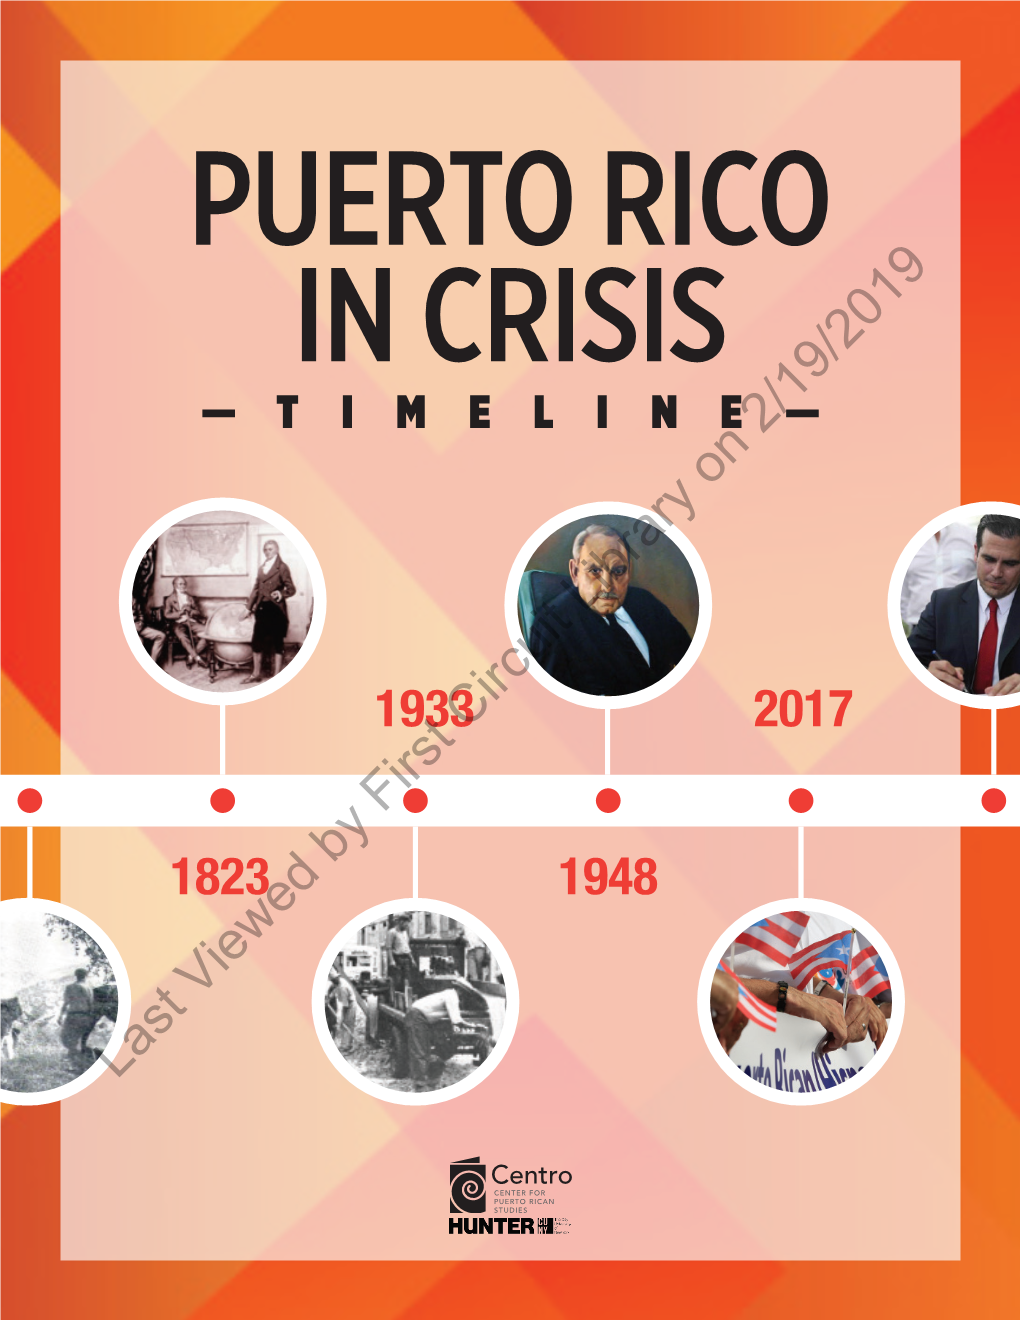 Puerto Rico's Economic Crisis Timeline